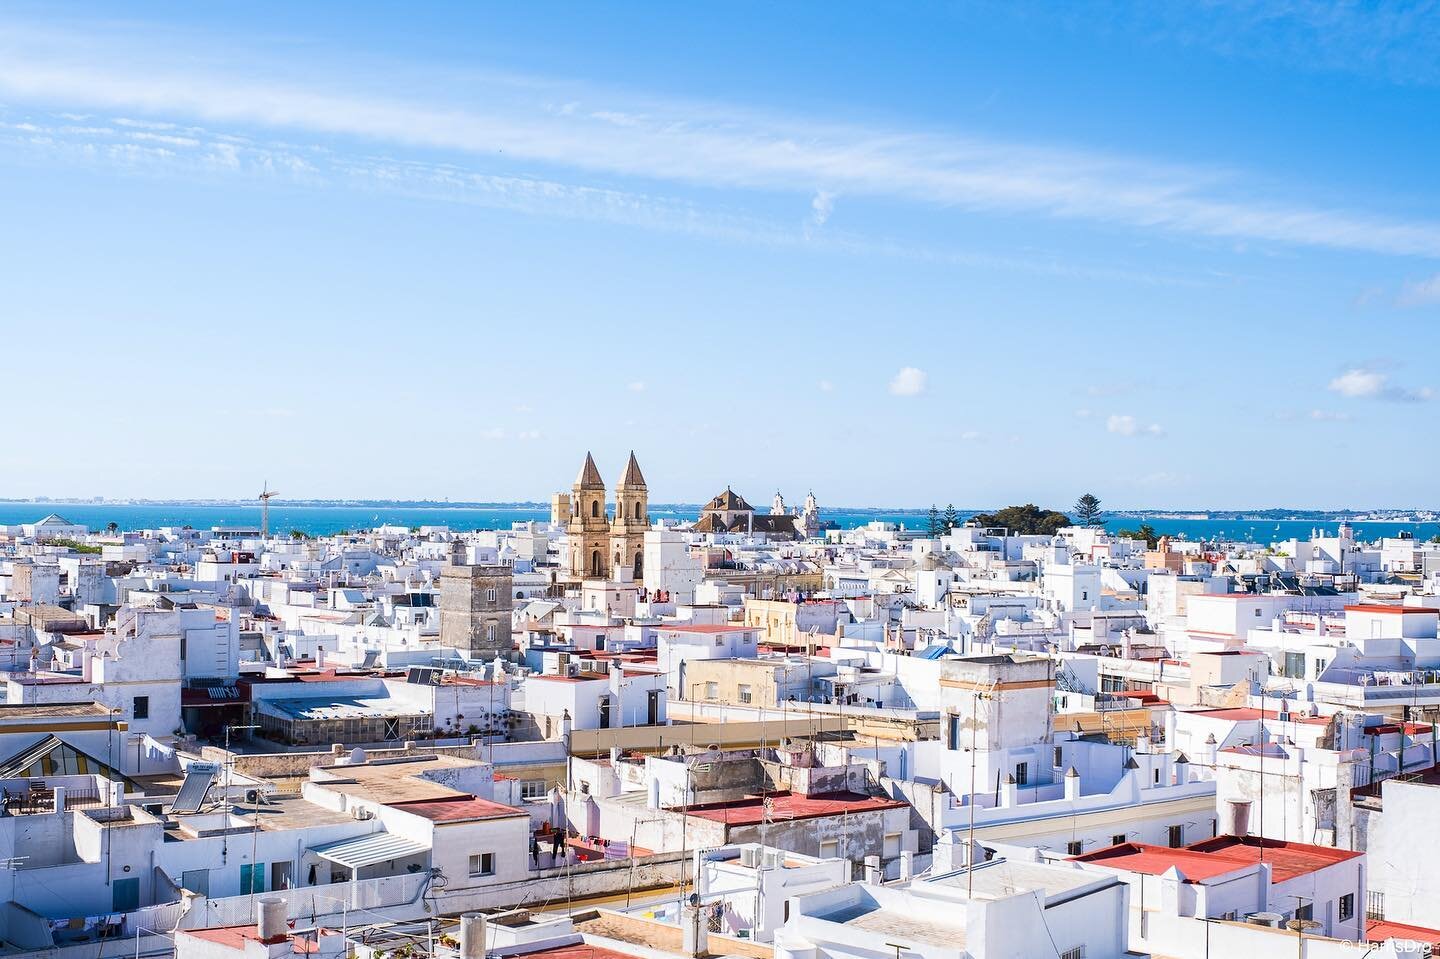 Blue seas, blue skies and the cityscape of Cadiz. Simply stunning. #c&aacute;diz #spain🇪🇸 #cityscapes
.
.
.
.
.
.
#whitehouse #skyline #summer #summertime #bluskies #blue #beautifulcities #exploreeurope #europe_vacations #europetravel #exploremore 